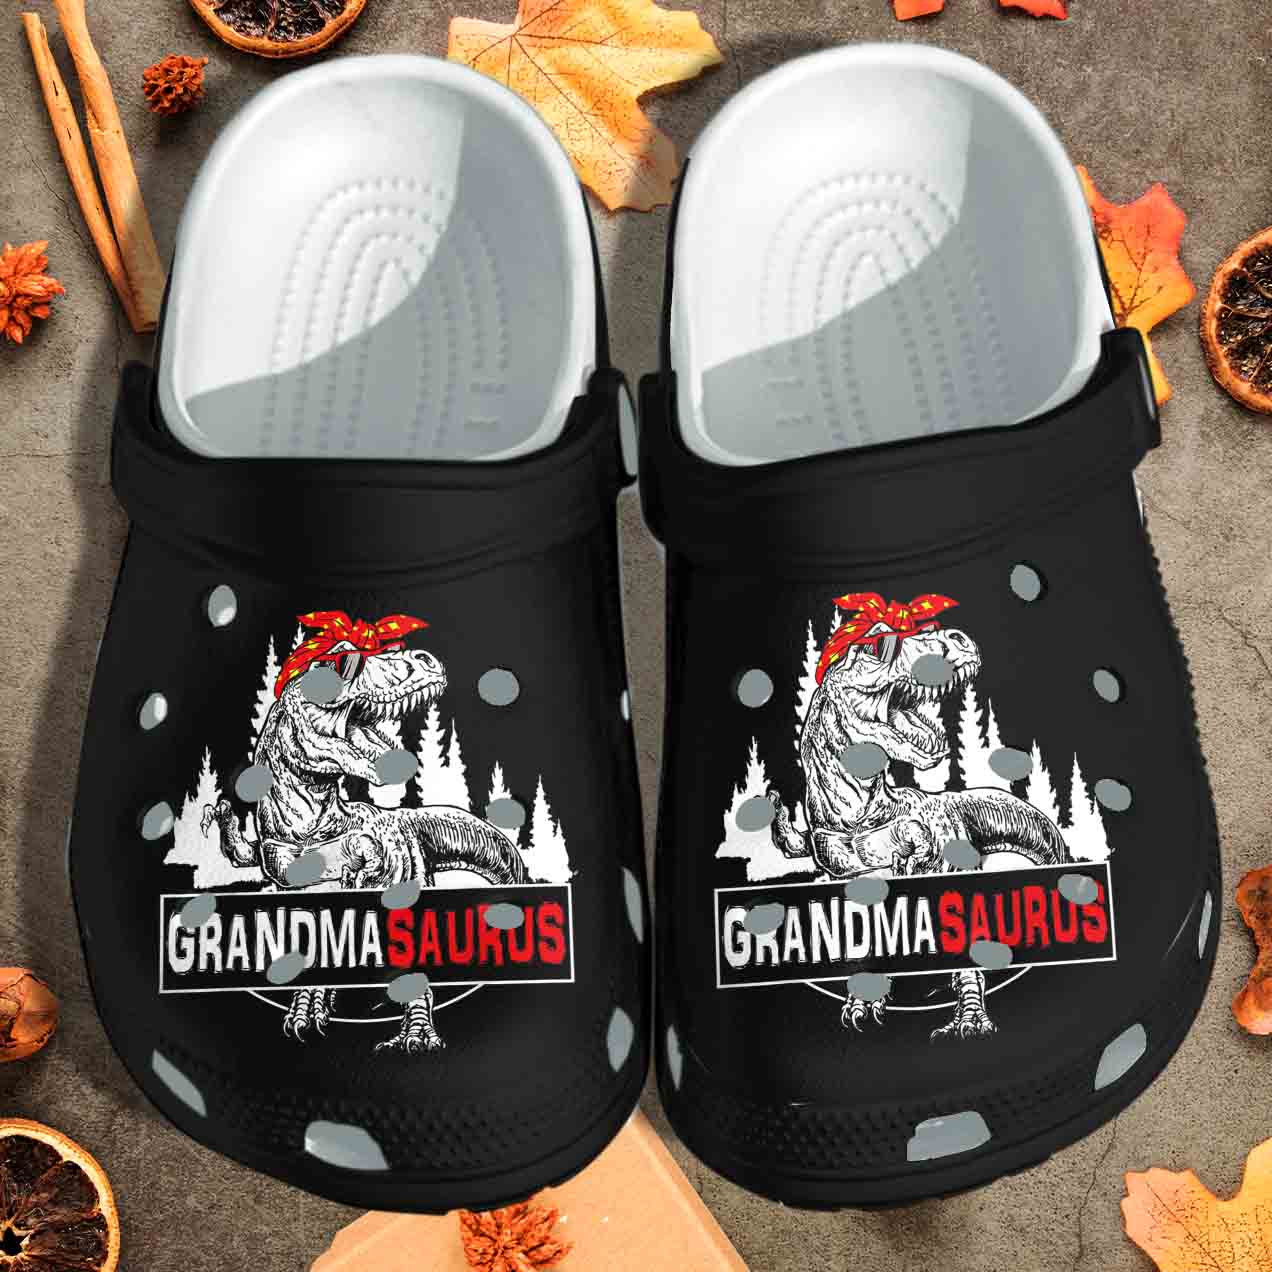 Grandmasaurus Crocs Shoes T Rex Dinosaur Grandma Saurus Crocs Clog Birthday Gift For Grandma Mother Granddaughter